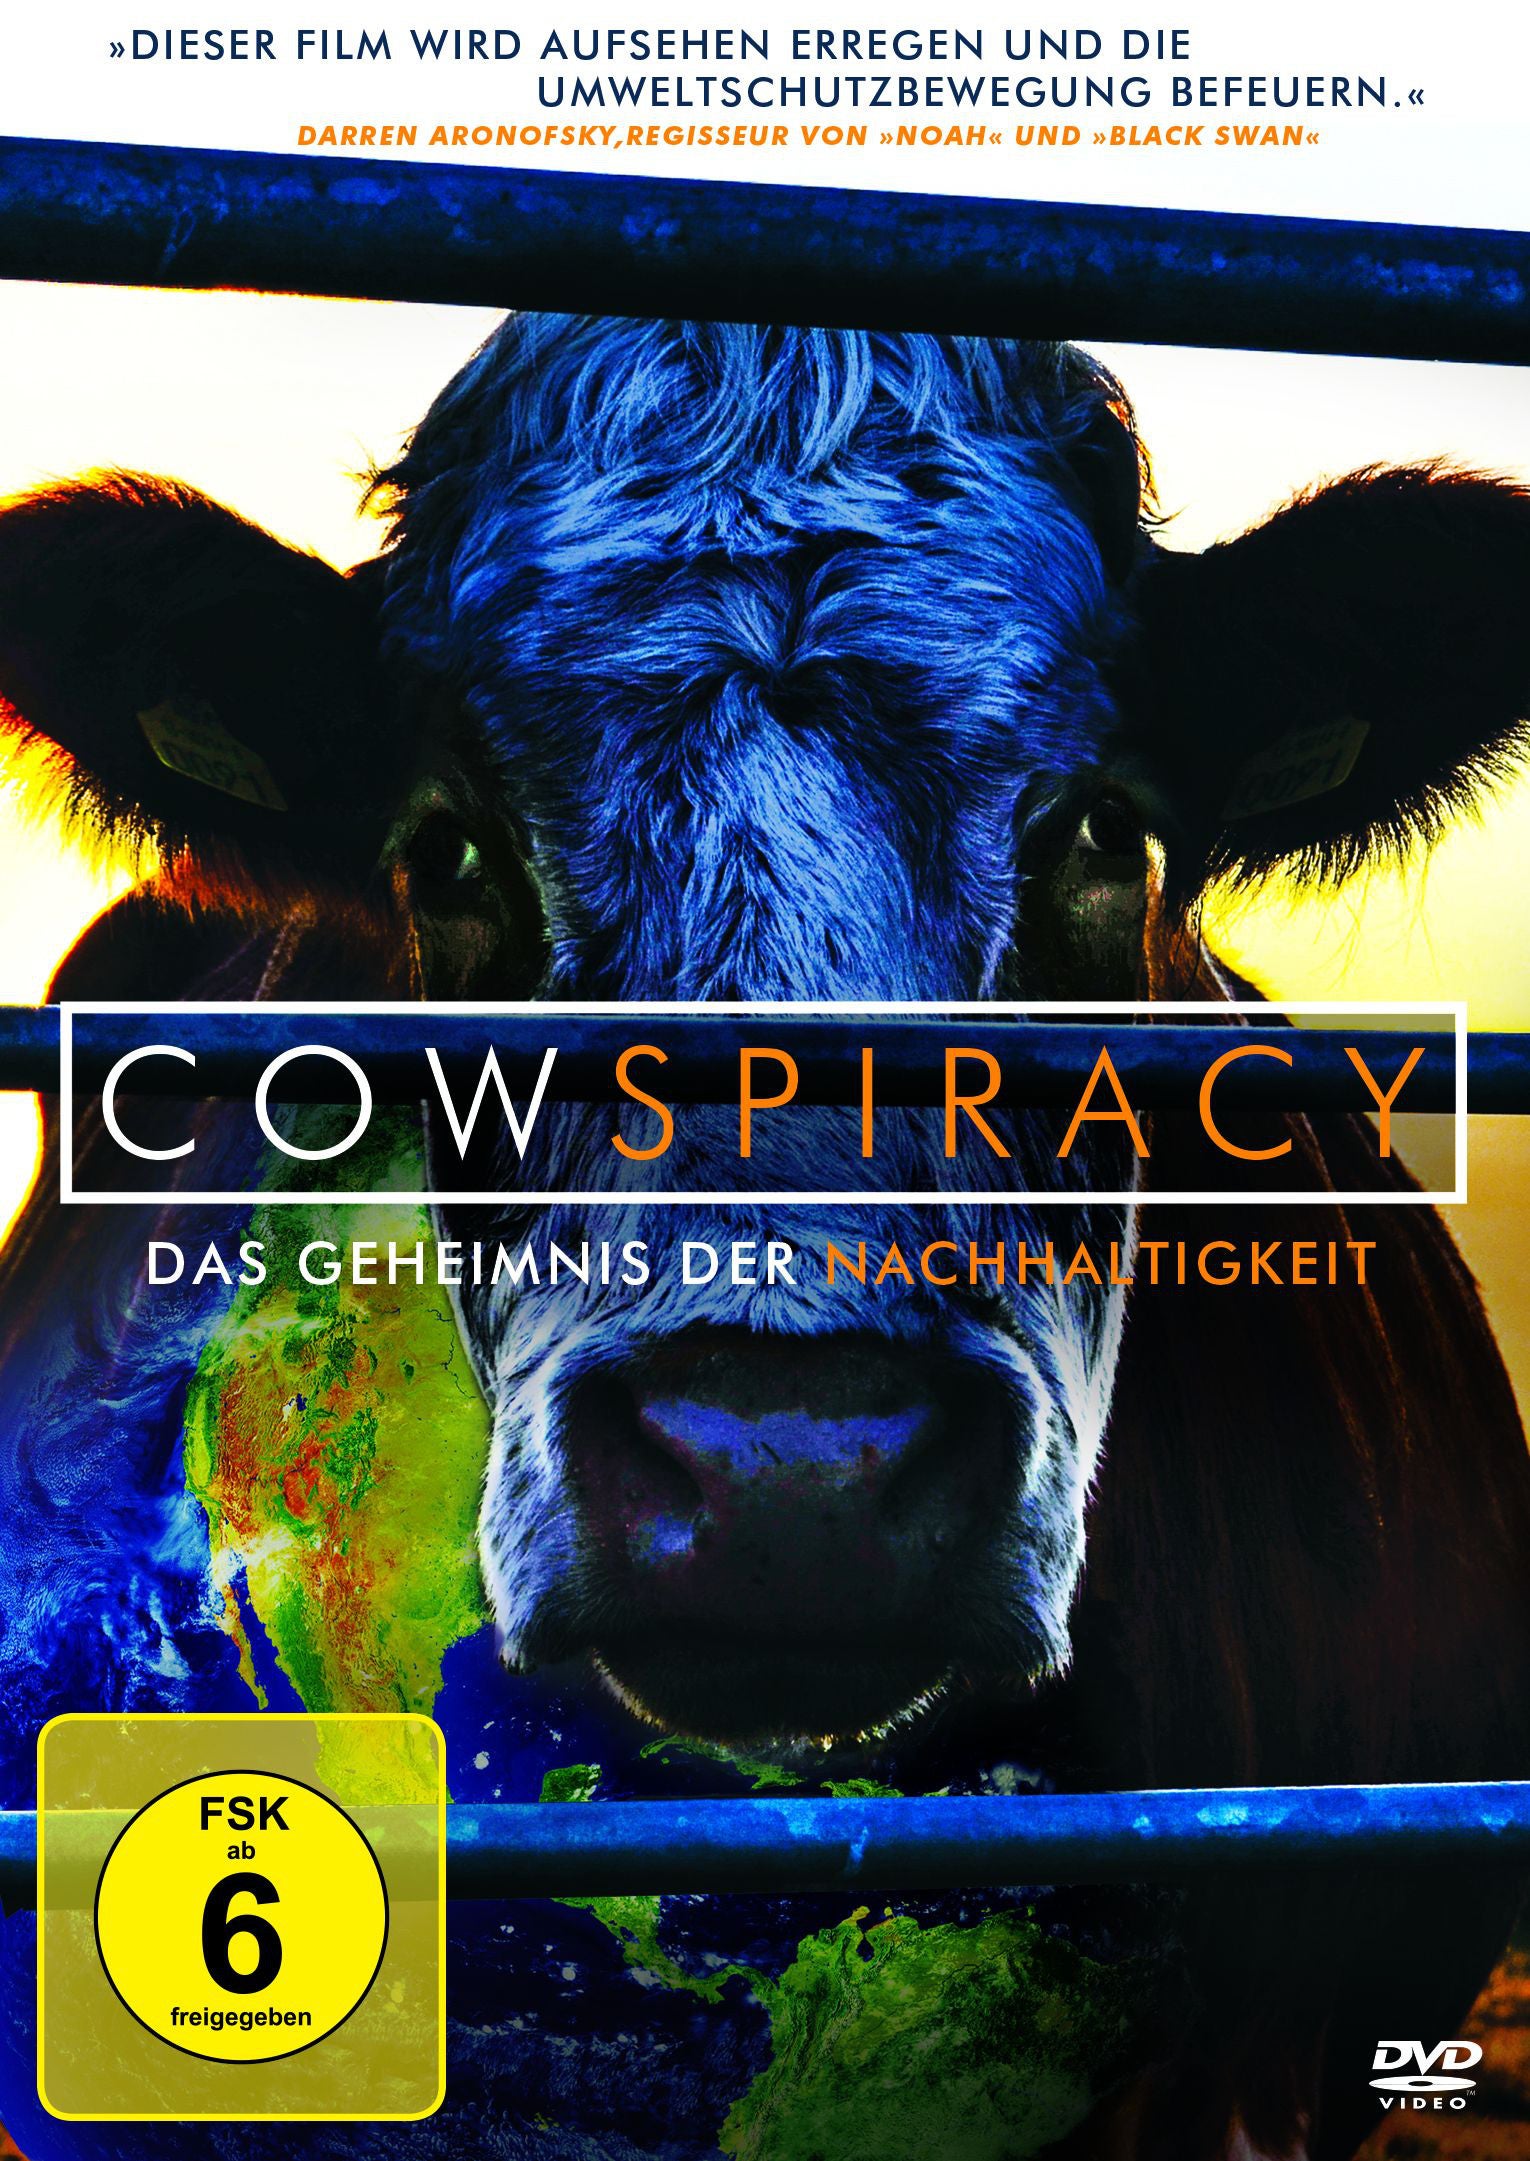 Cowspiracy [DVD]